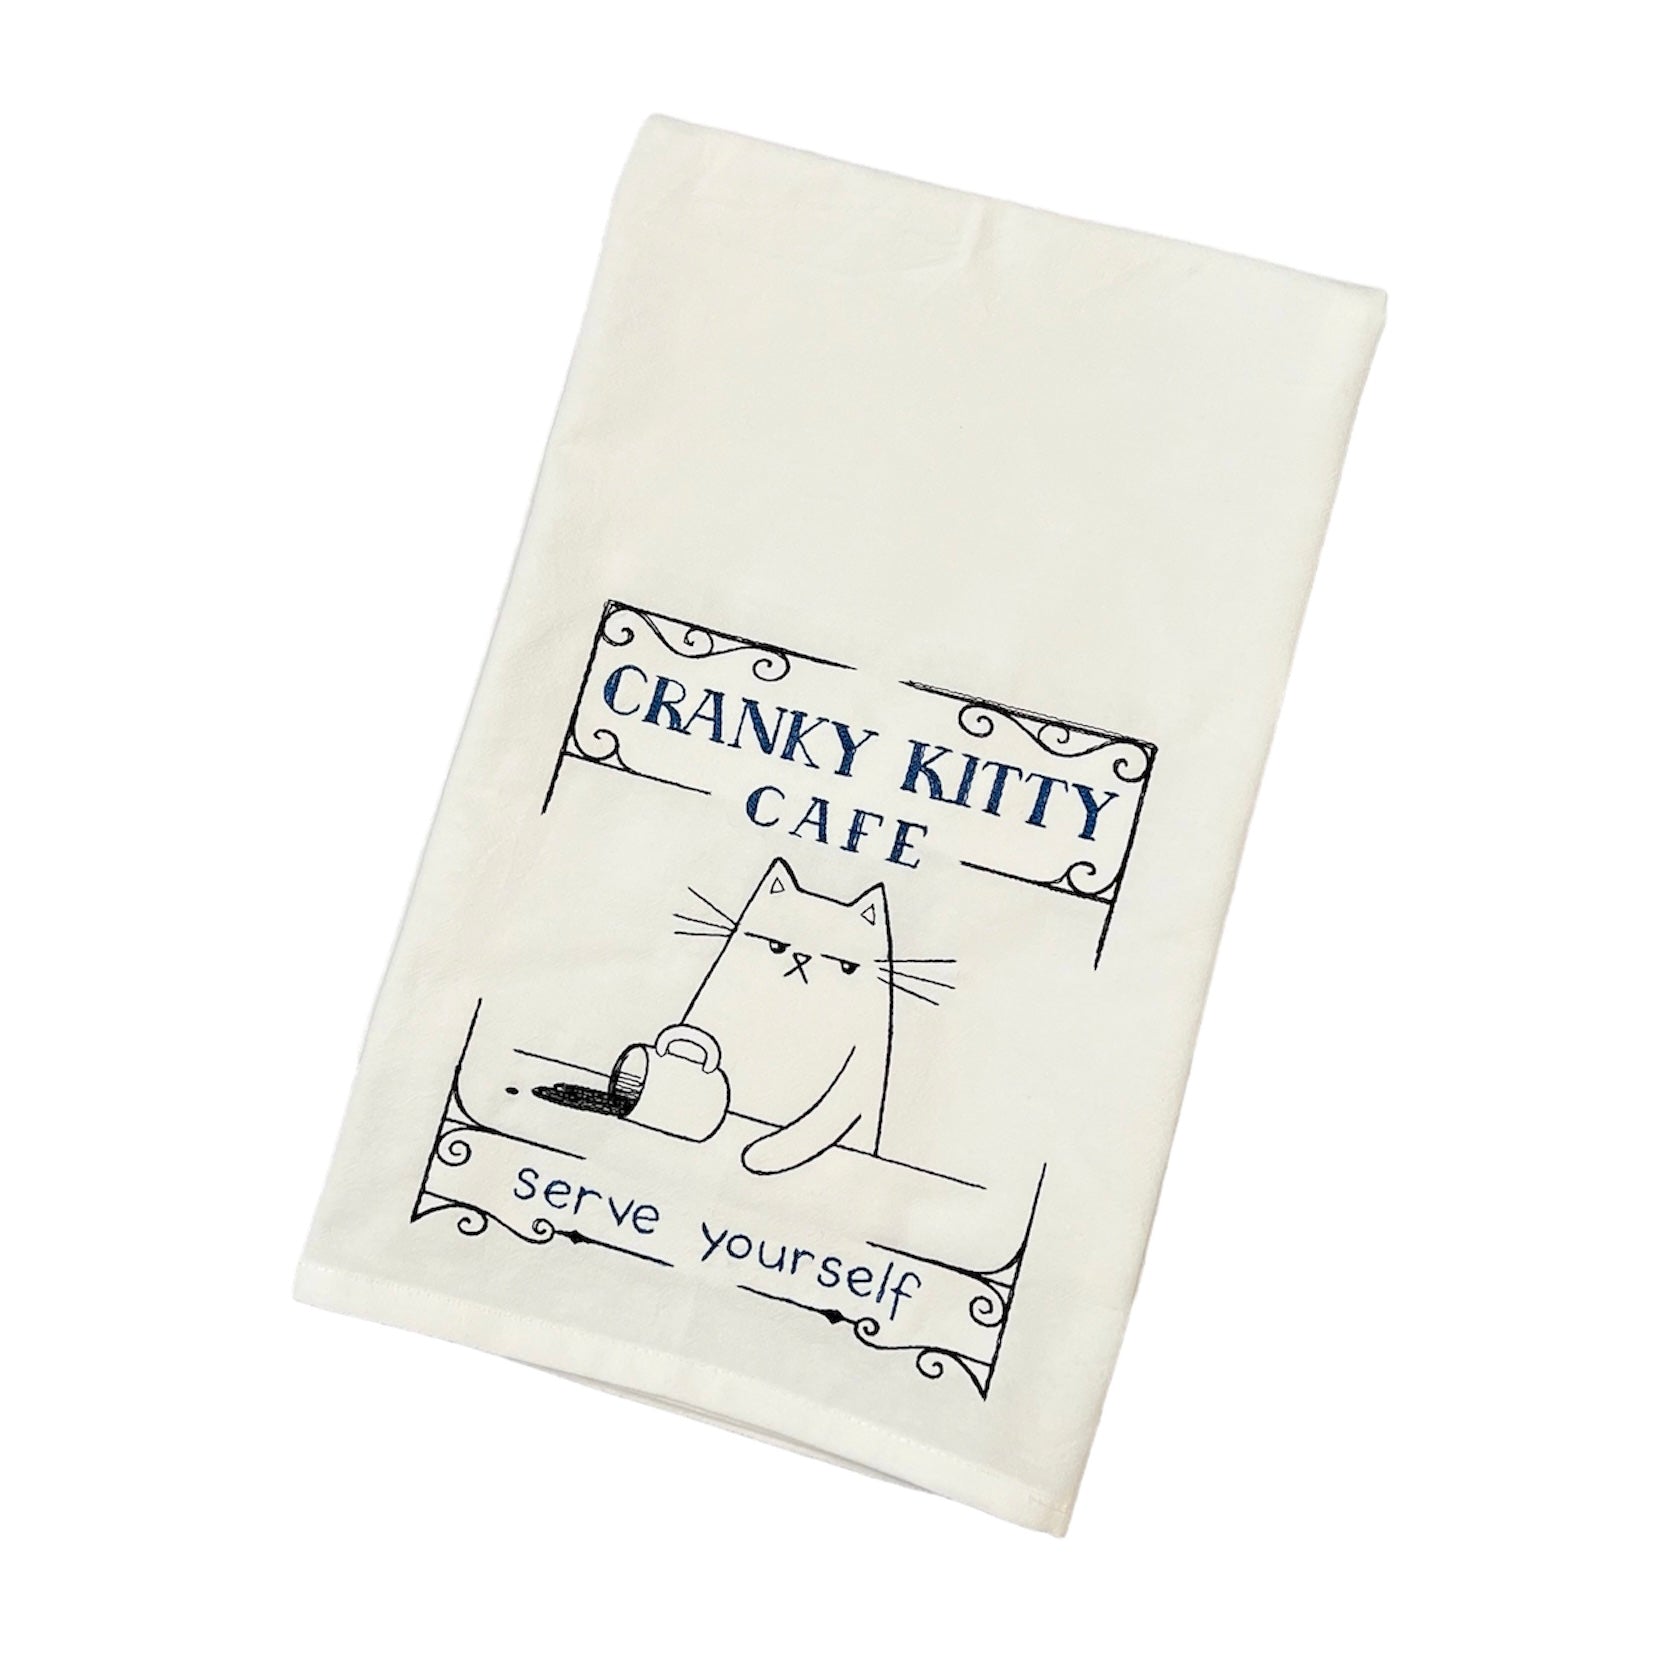 "Cranky Kitty Cafe" Flour Sack Towel